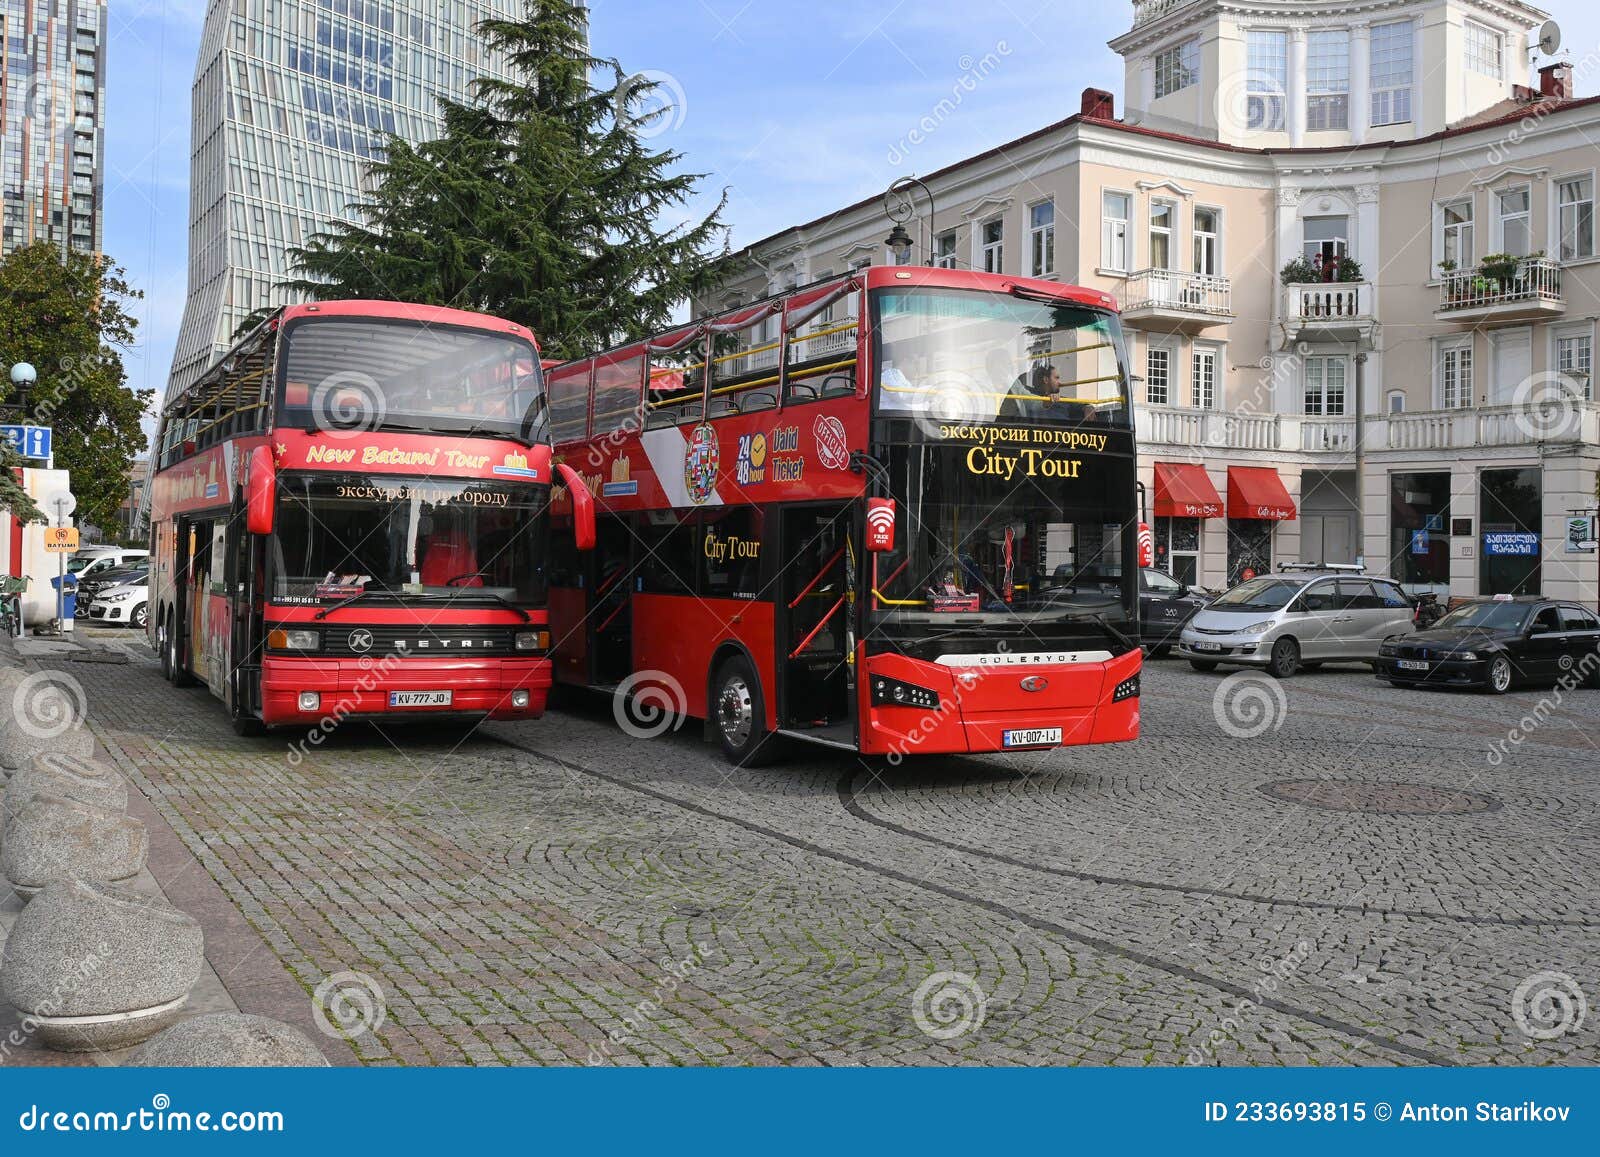 batumi bus tour